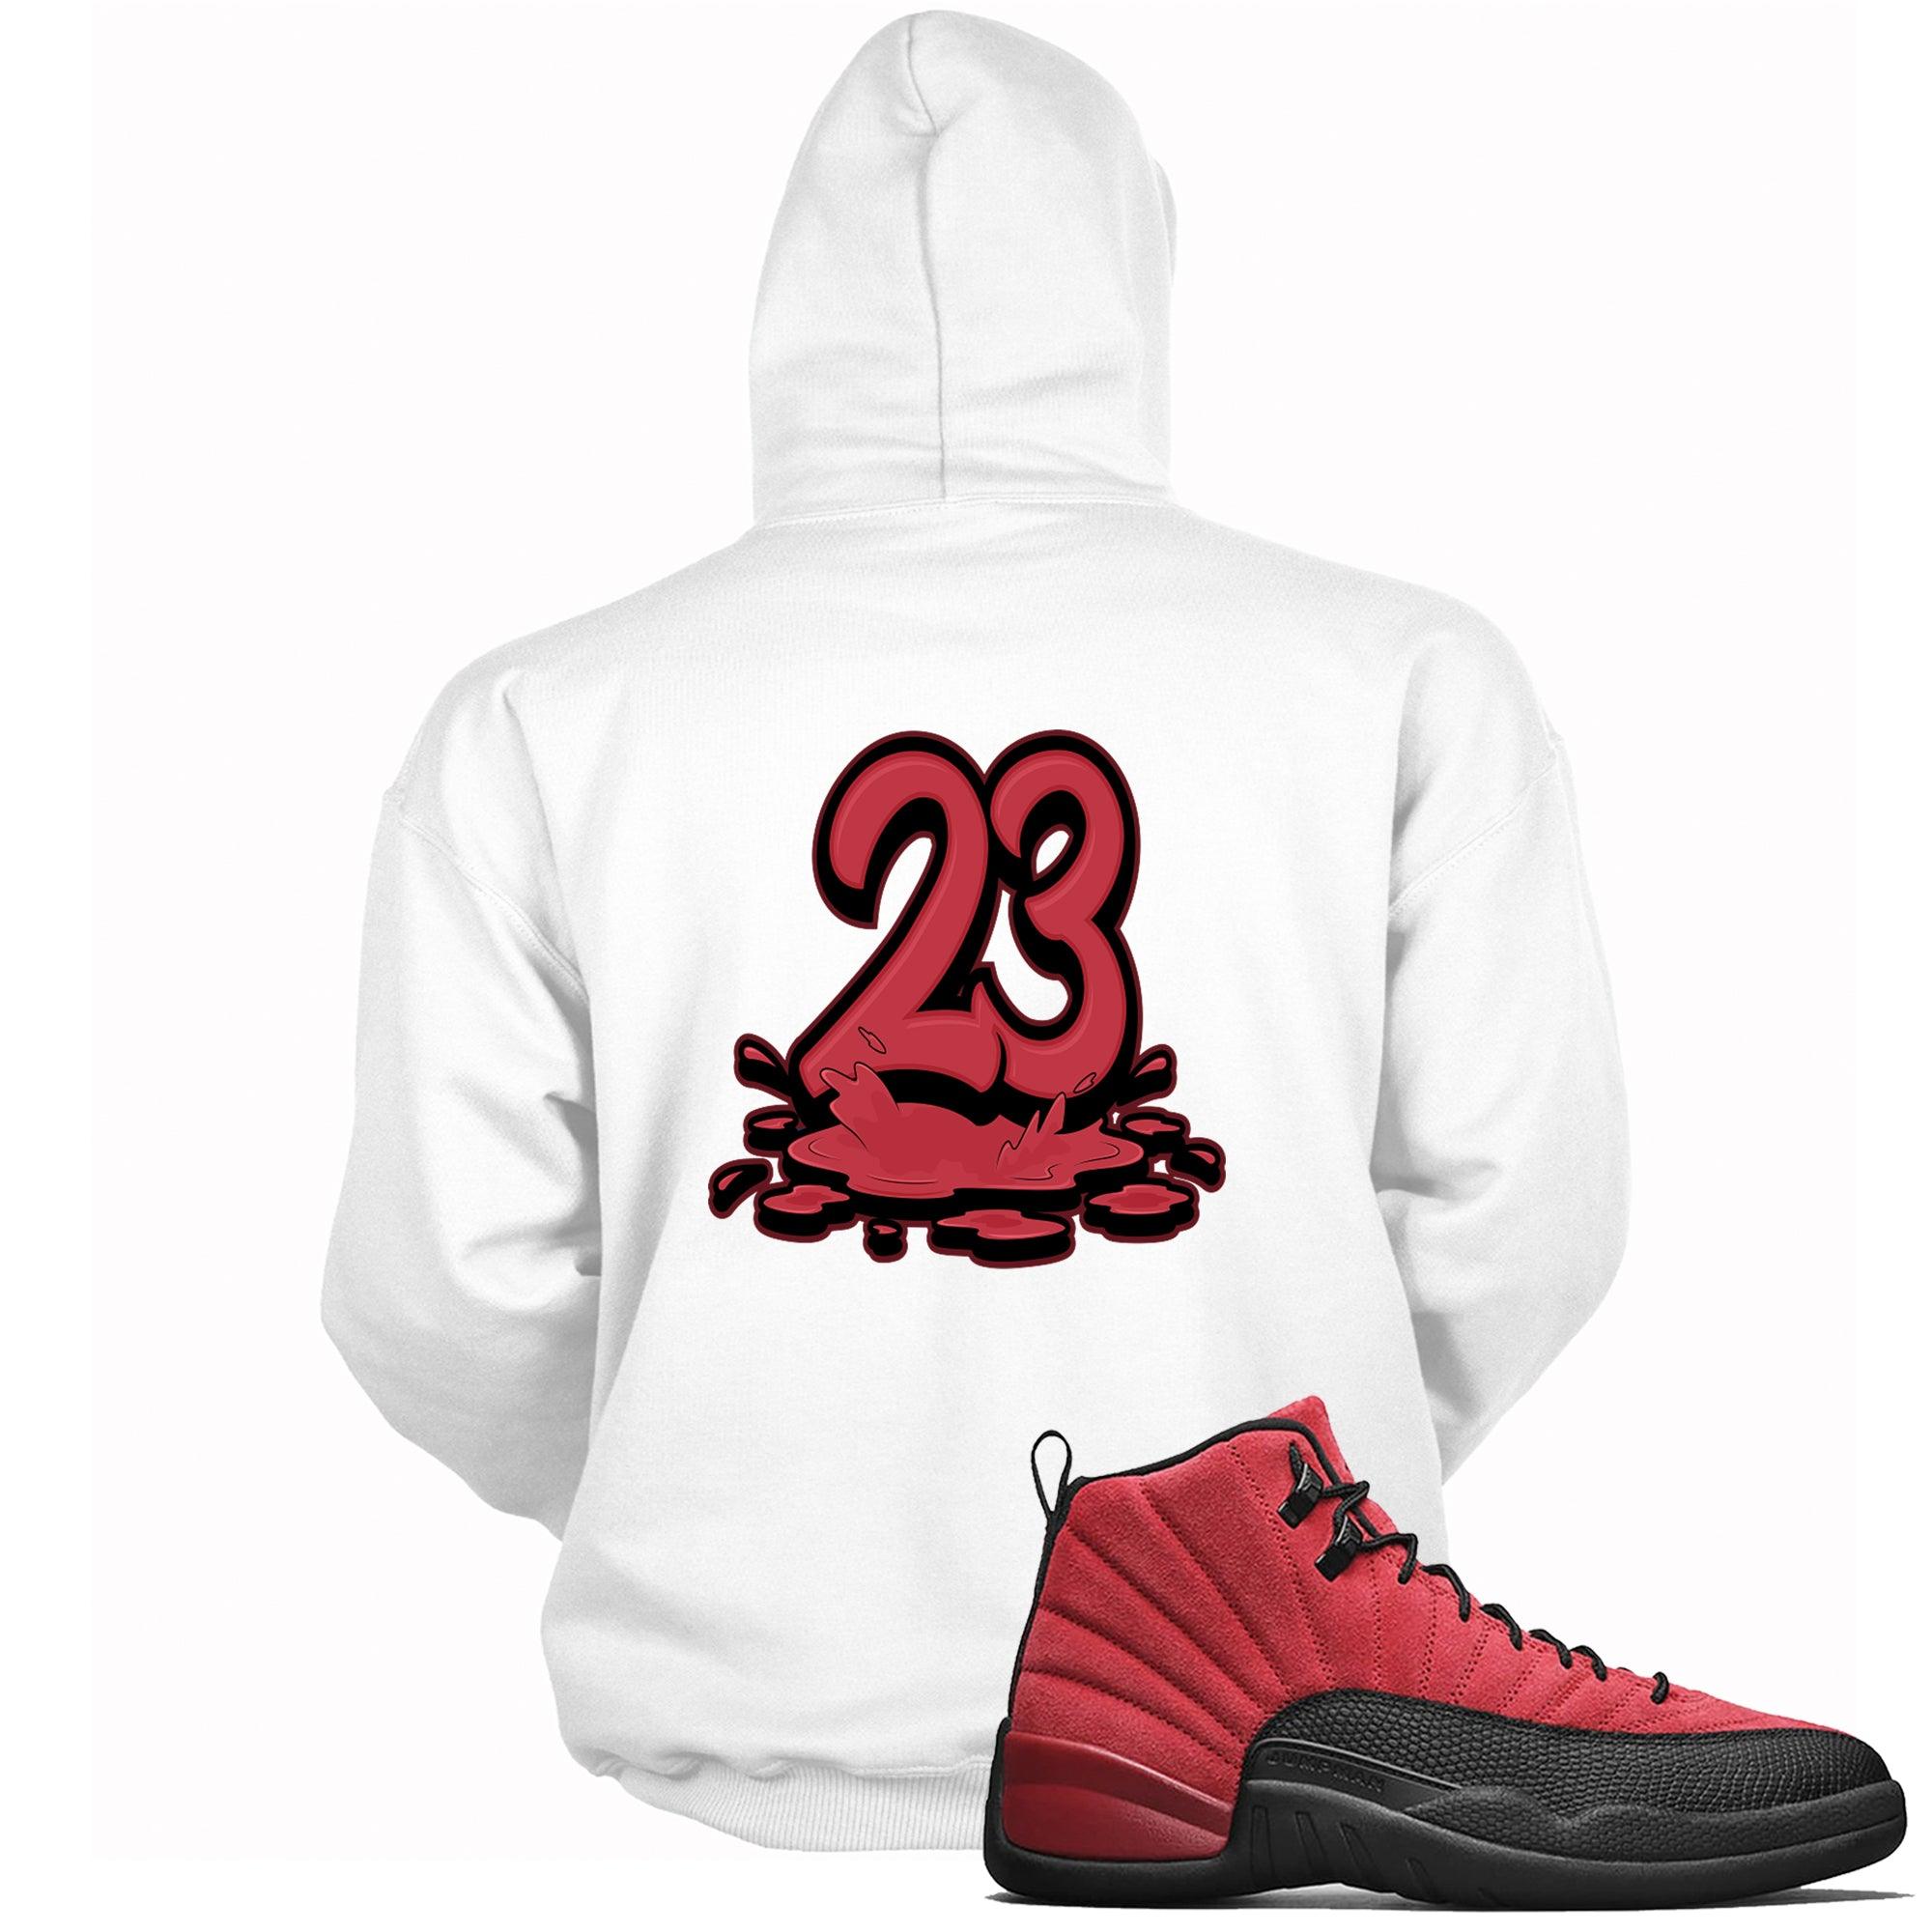 23 Melting Sneaker Sweatshirt AJ 12 Retro Reverse Flu Game photo